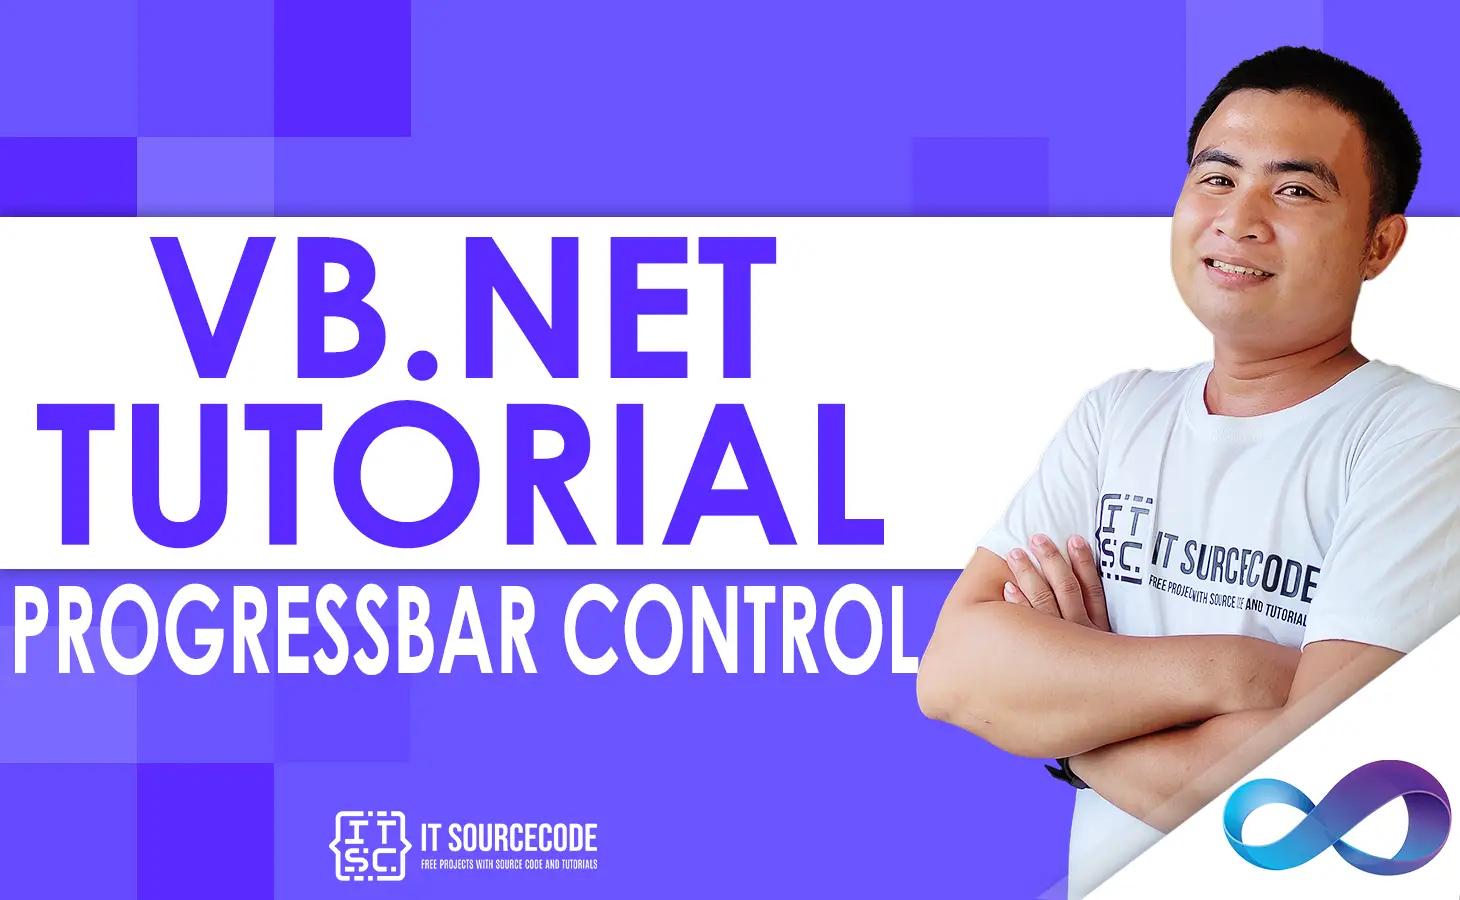 Progress Bar Control in VB NET